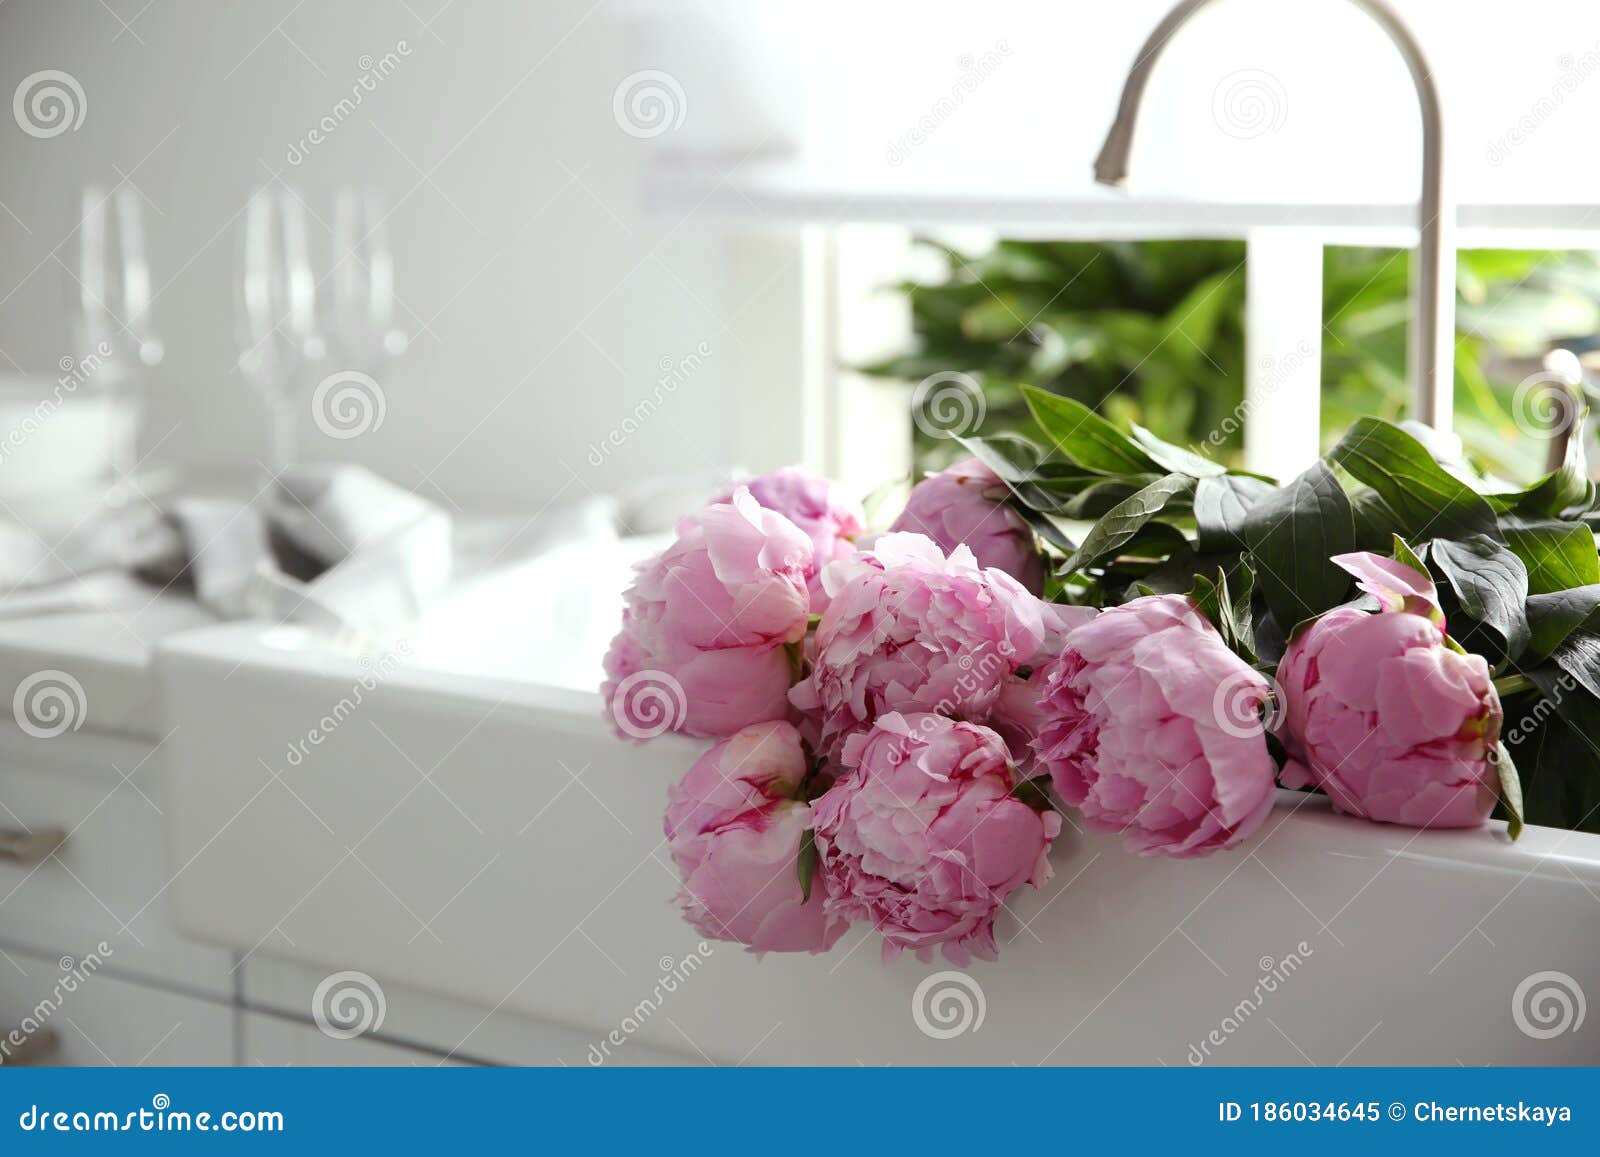 pink peonies kitchen sink